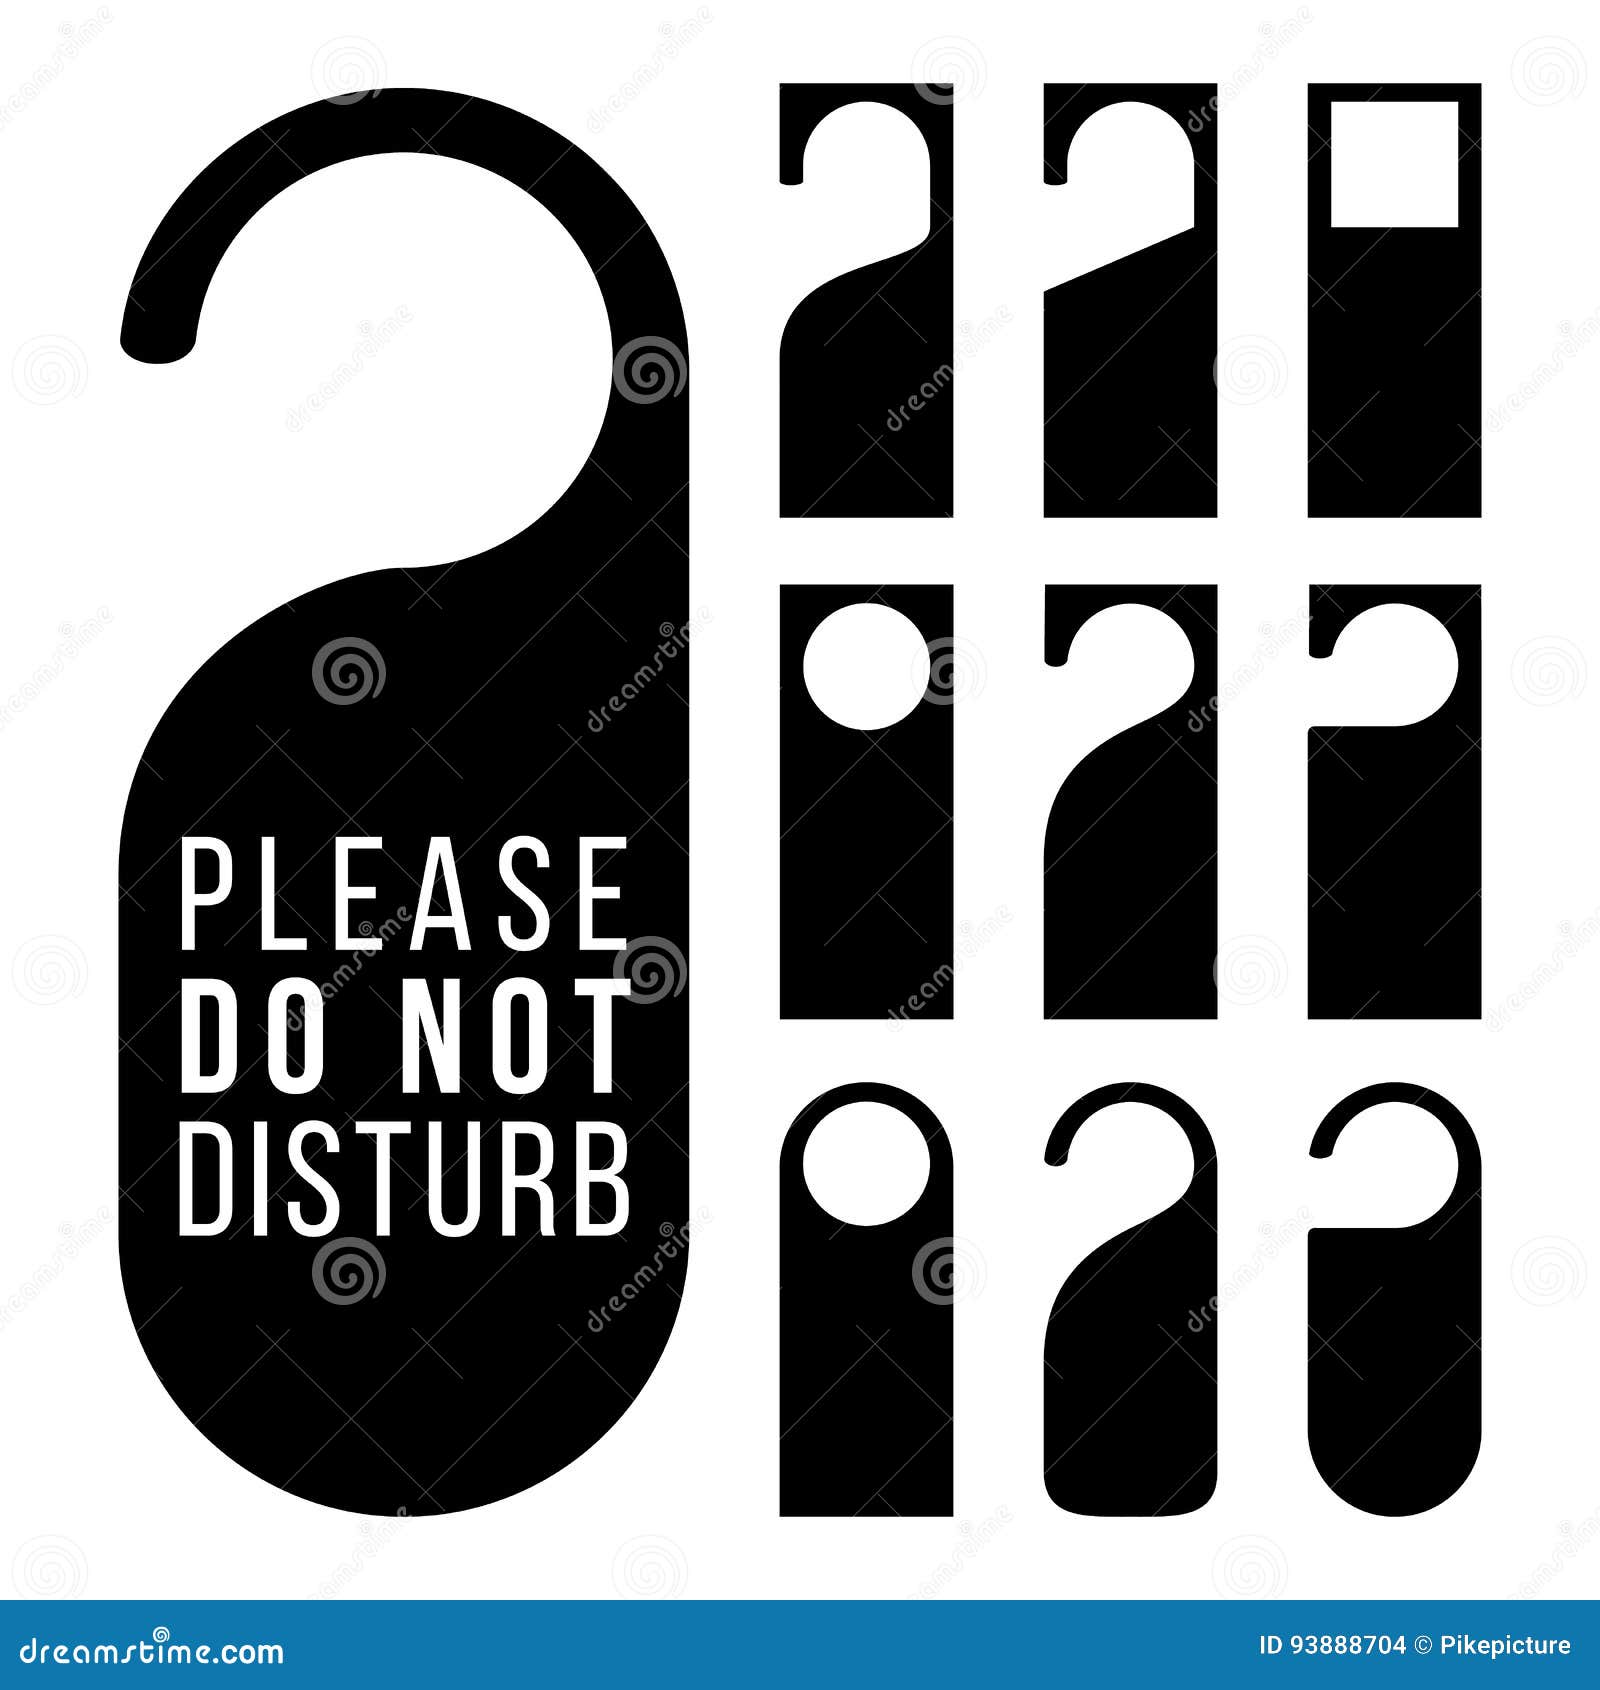 Hotel Hanger Sign Door Knob Do Not Disturb Do Not Disturb Sign